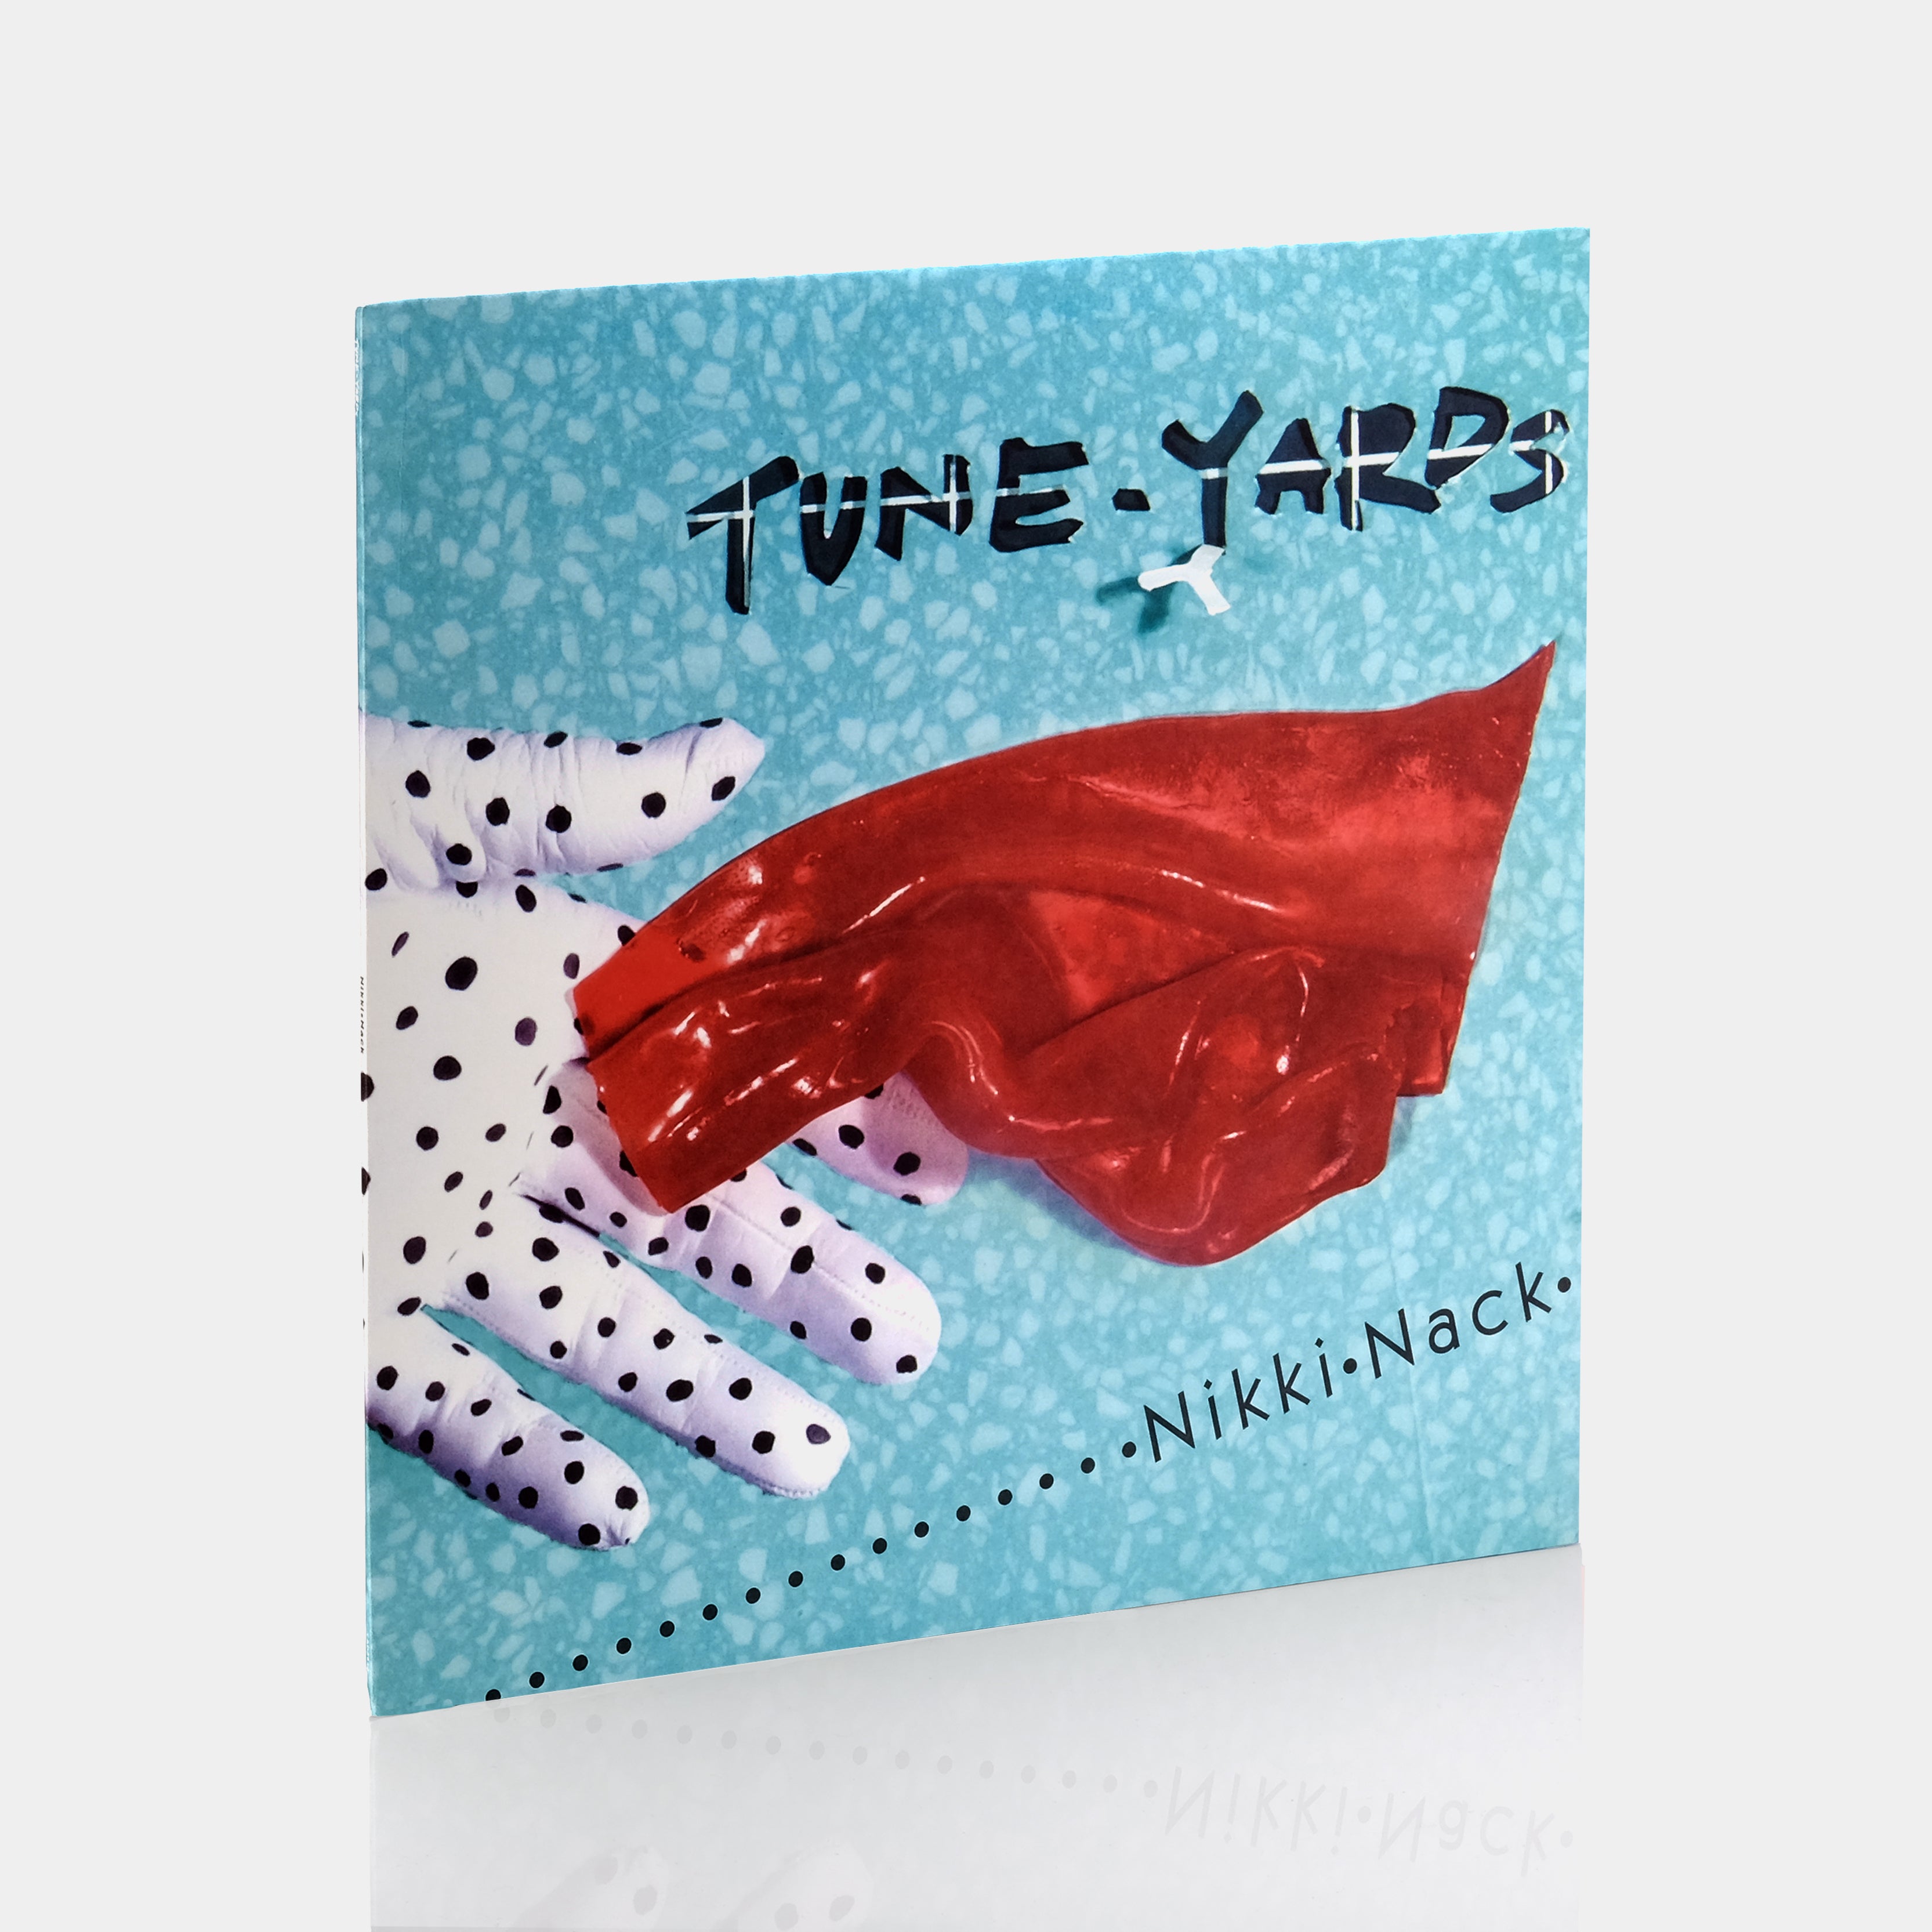 Tune-Yards - Nikki Nack LP Red Vinyl Record